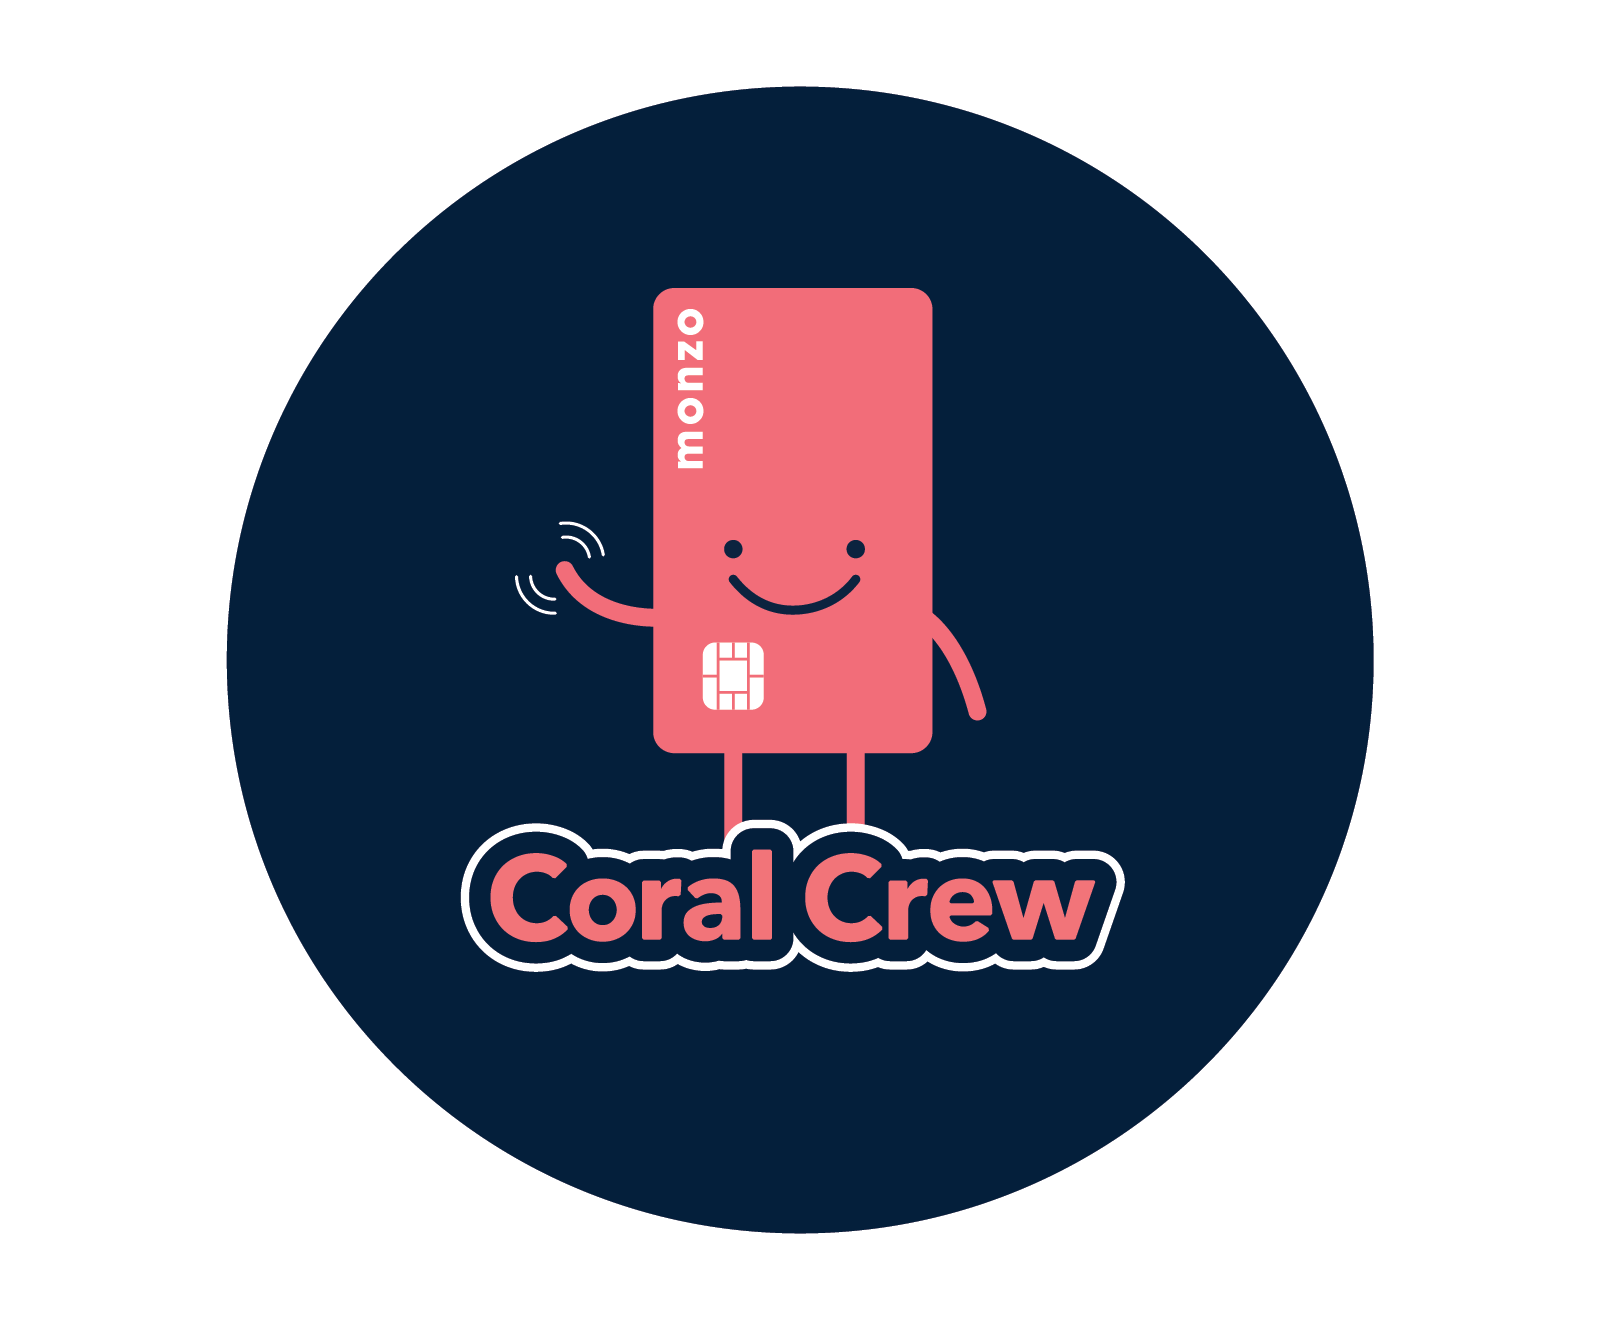 Illustration of Coral Crew logo